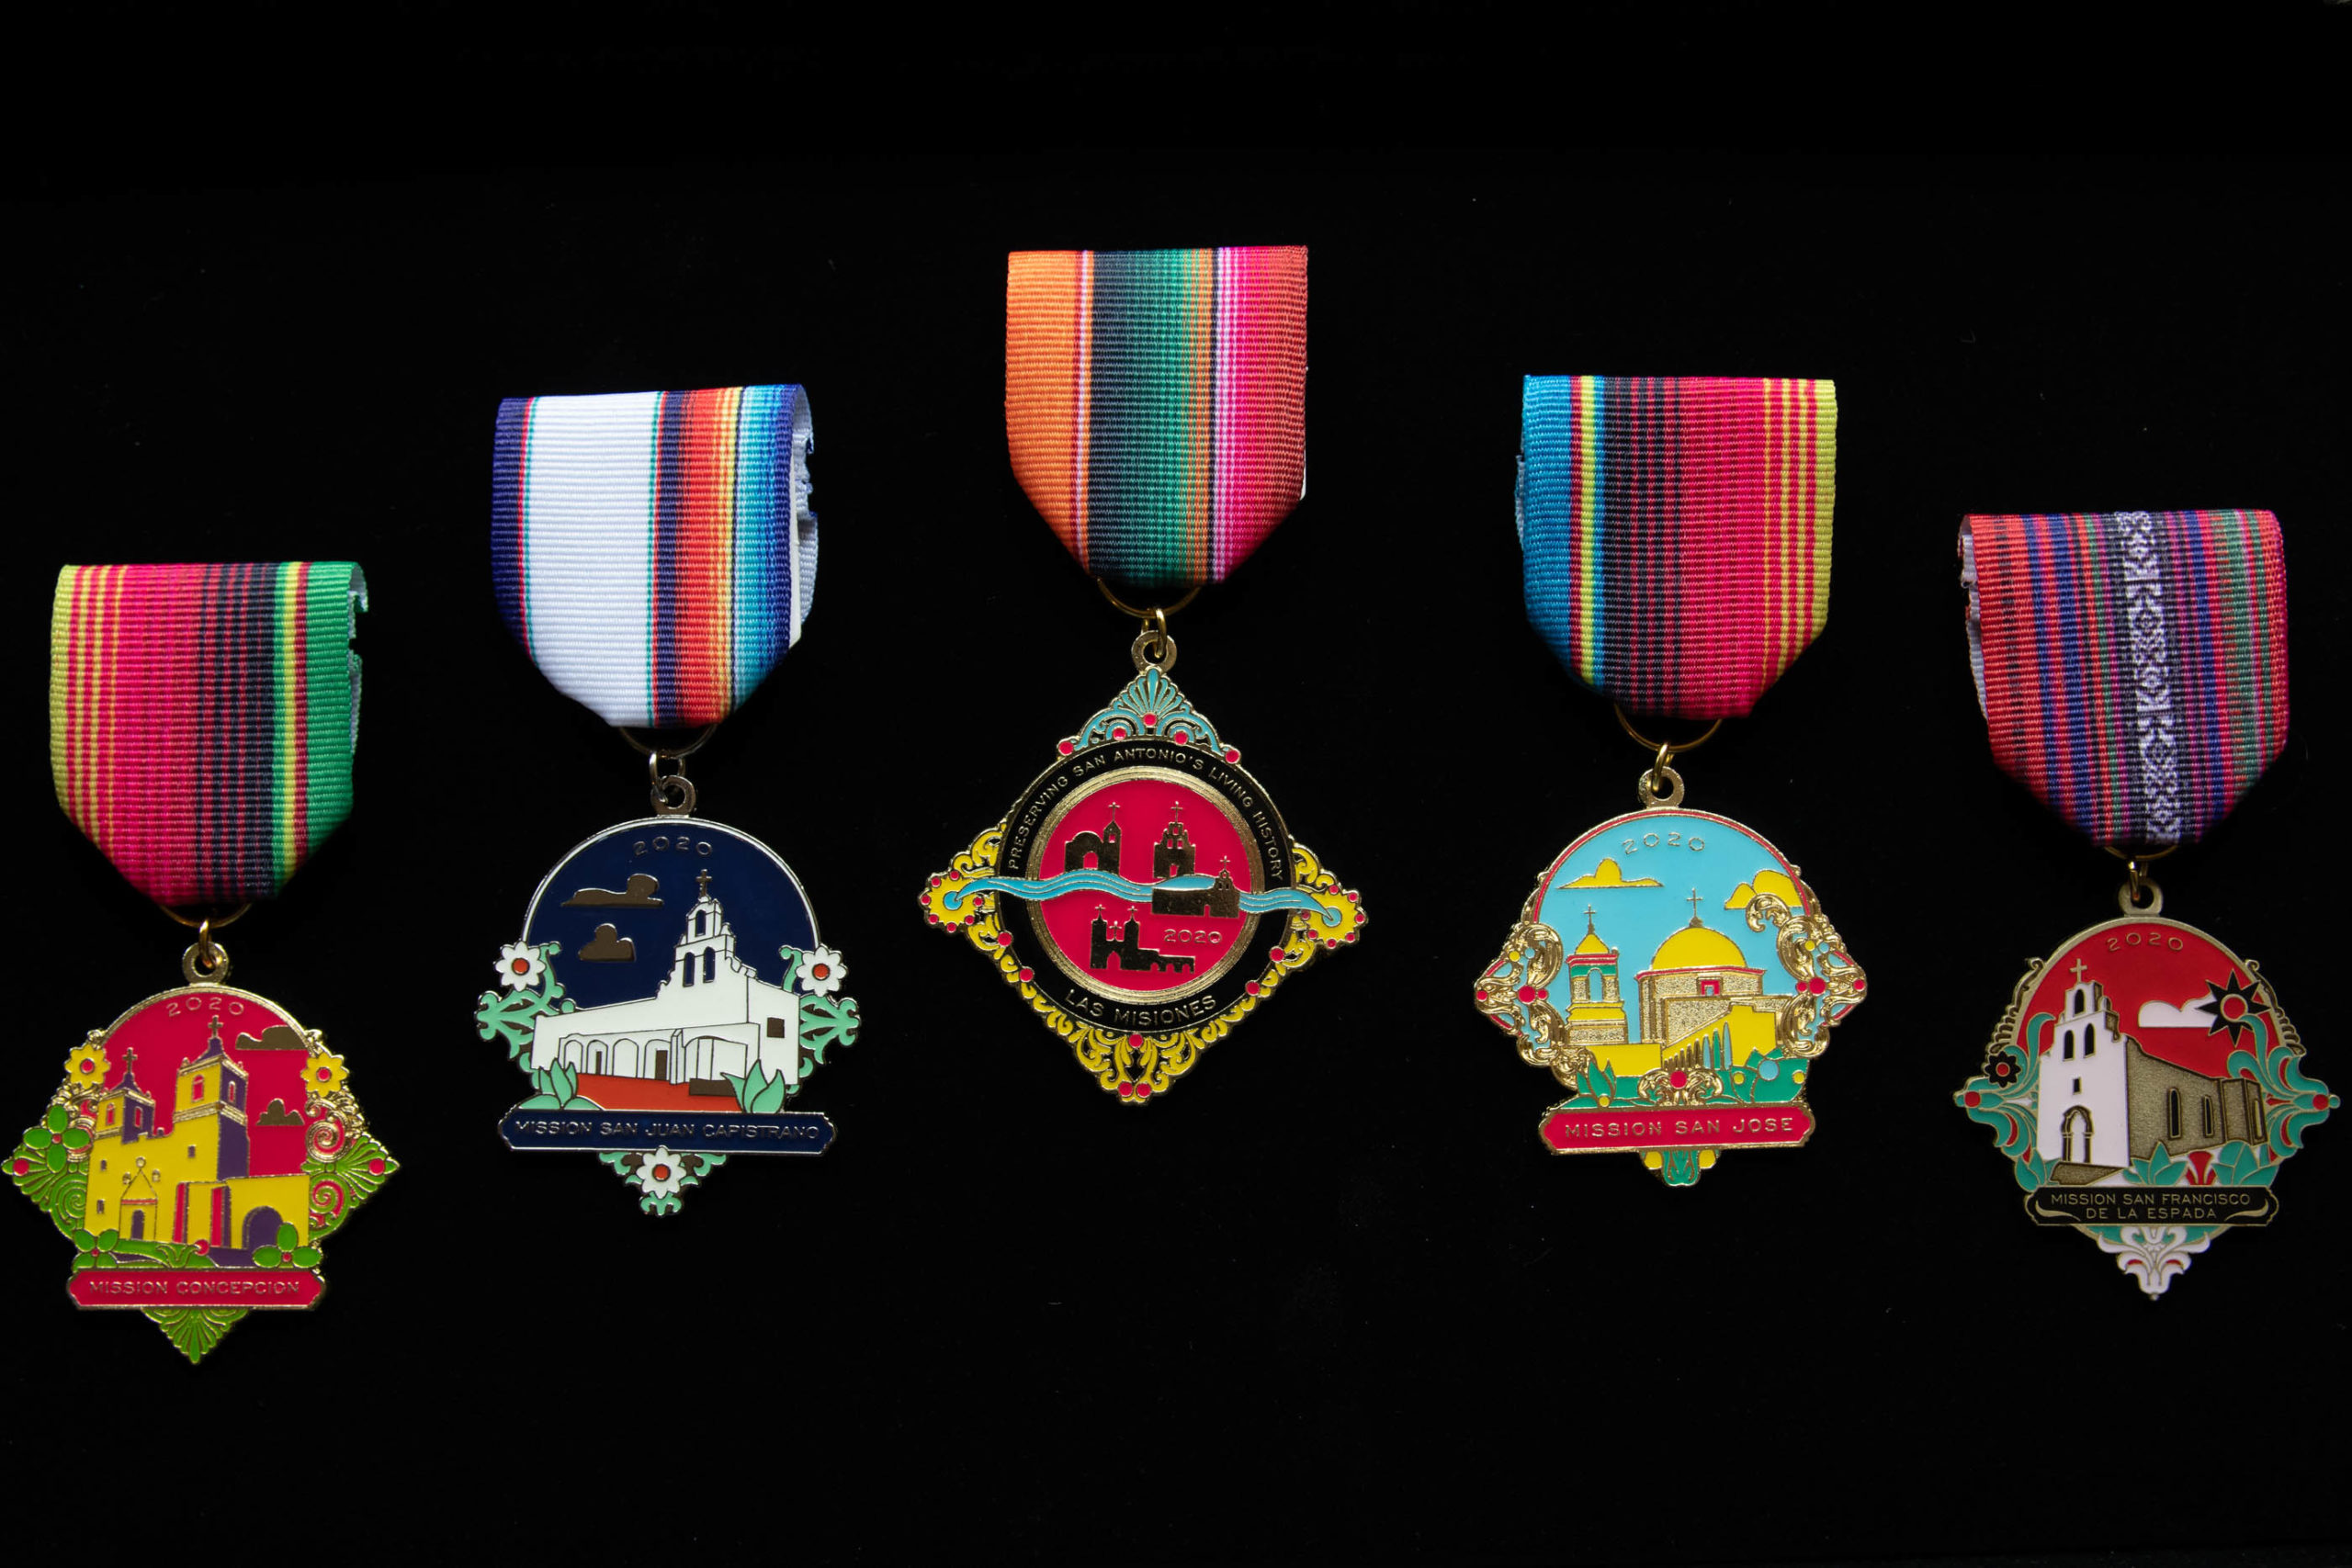 Mission DG Donates Fiesta Medals